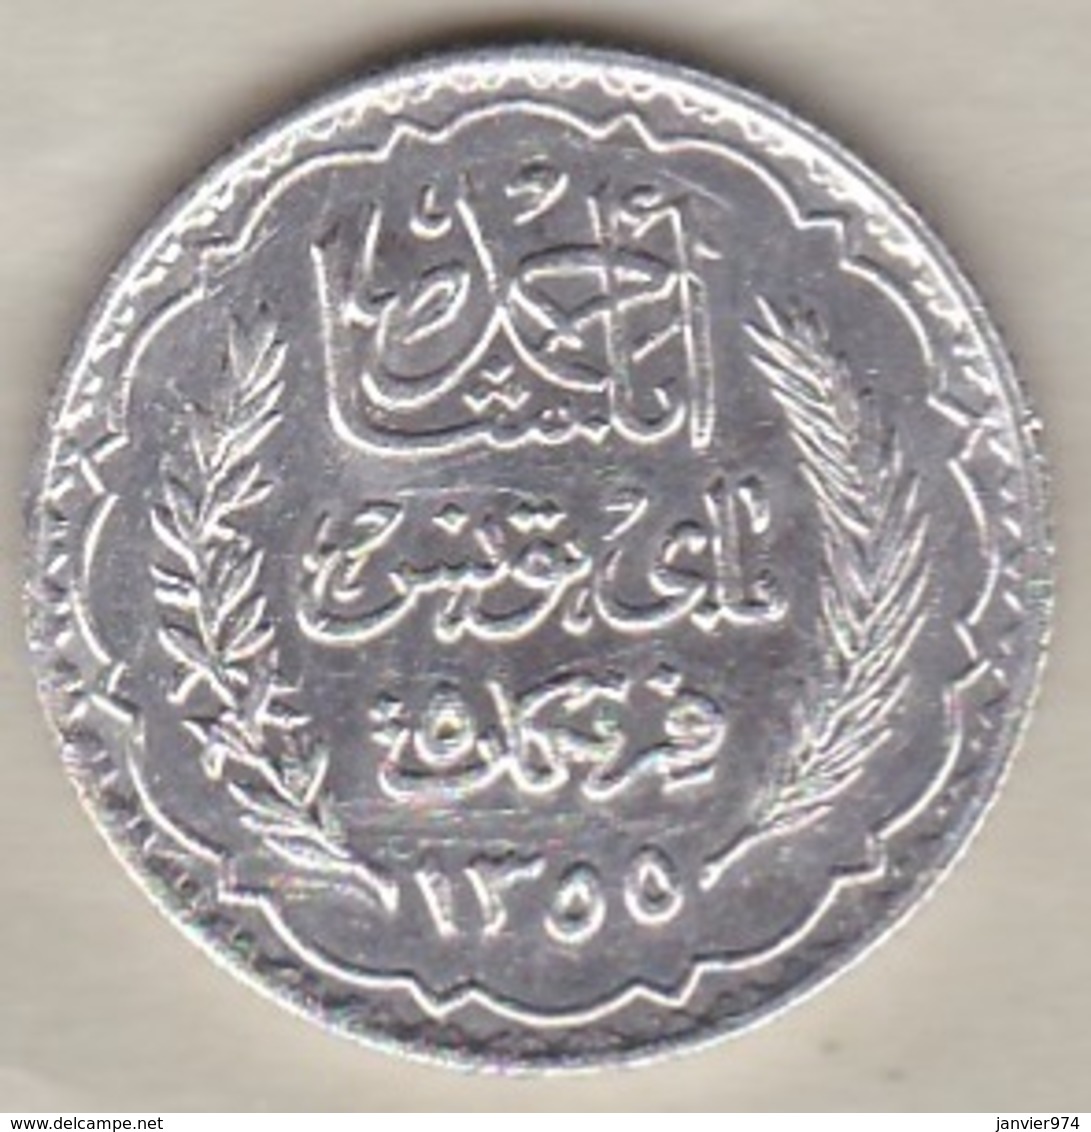 TUNISIE. 5 FRANCS 1936 (AH 1355). ARGENT / SILVER - Tunisia